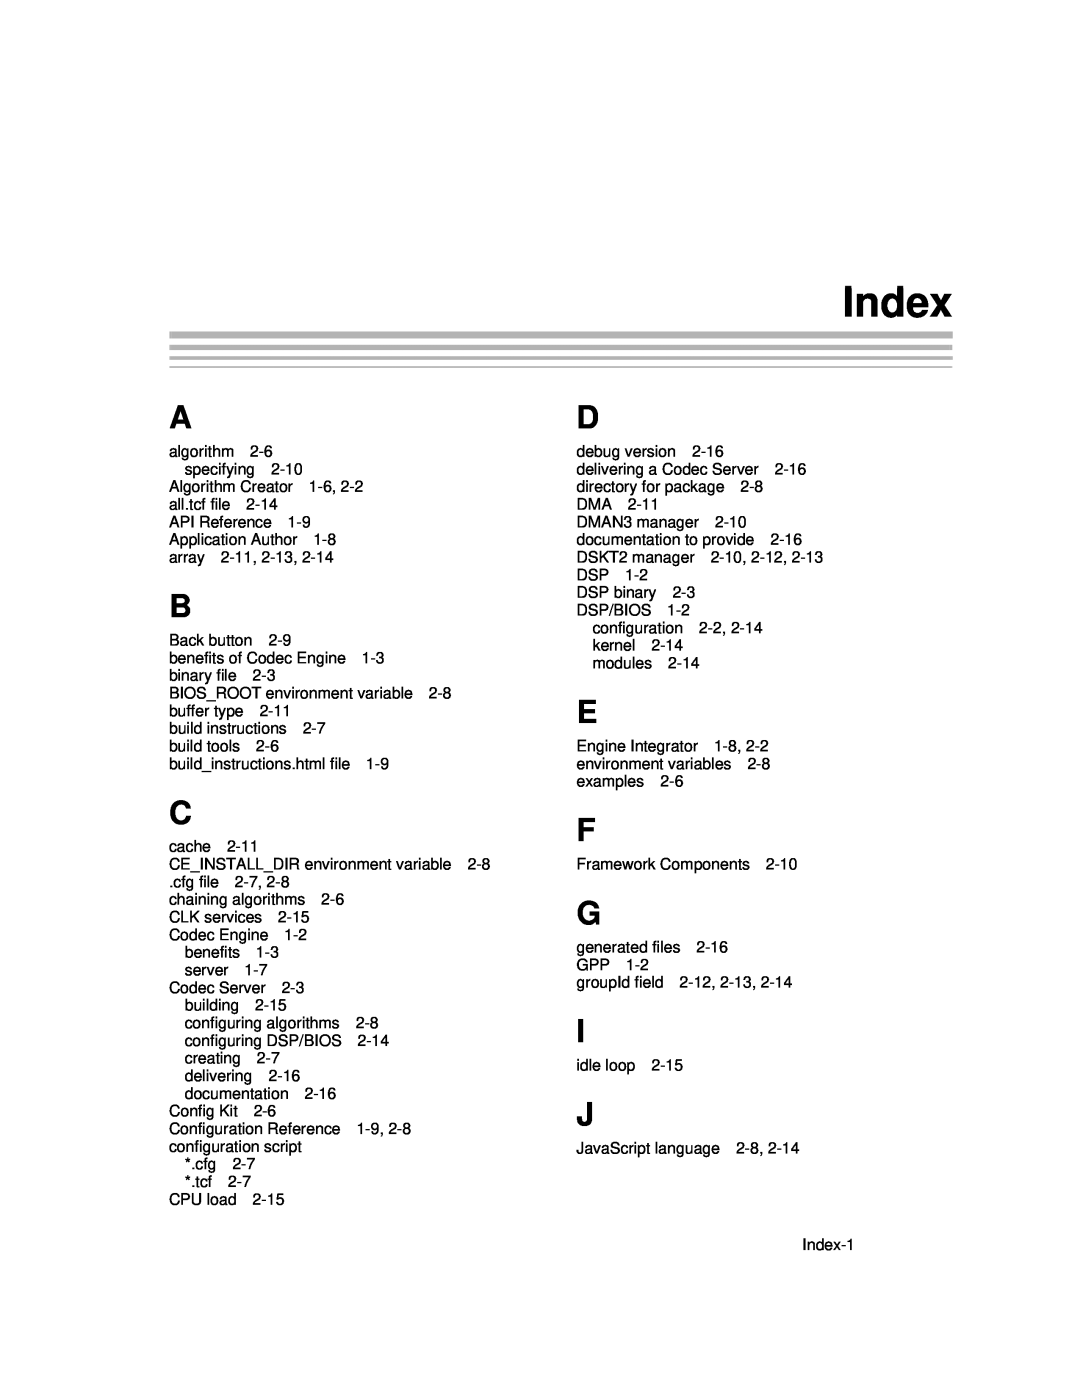 Texas Instruments Codec Engine Server manual Index 